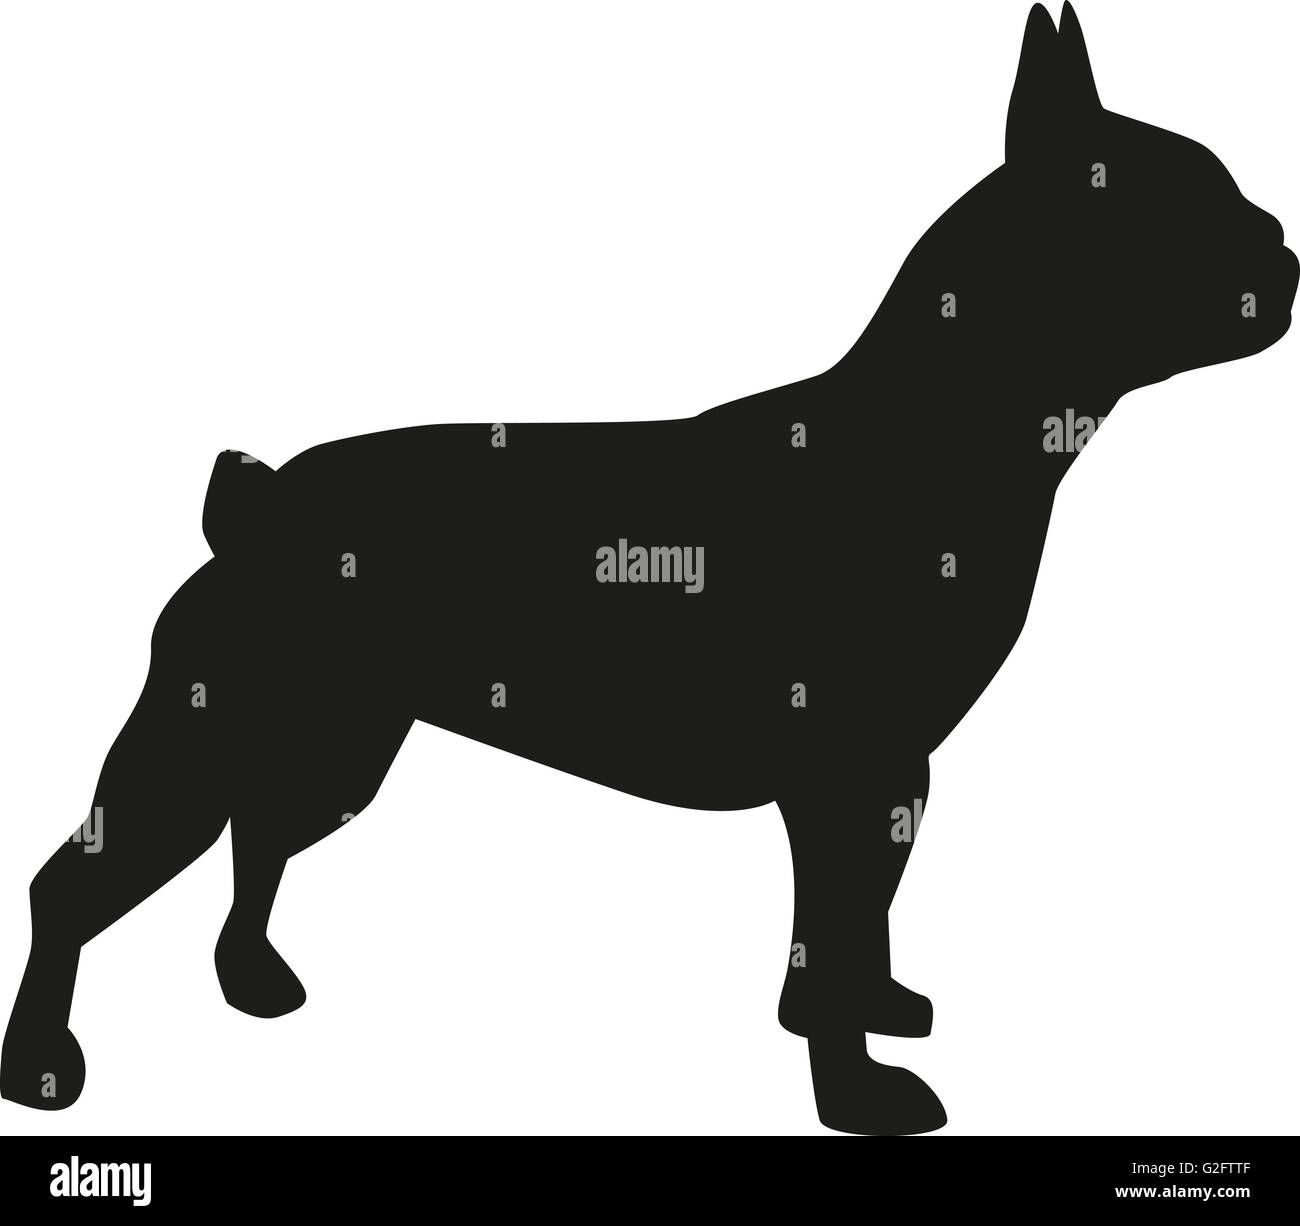 French bulldog silhouette Stock Photo - Alamy